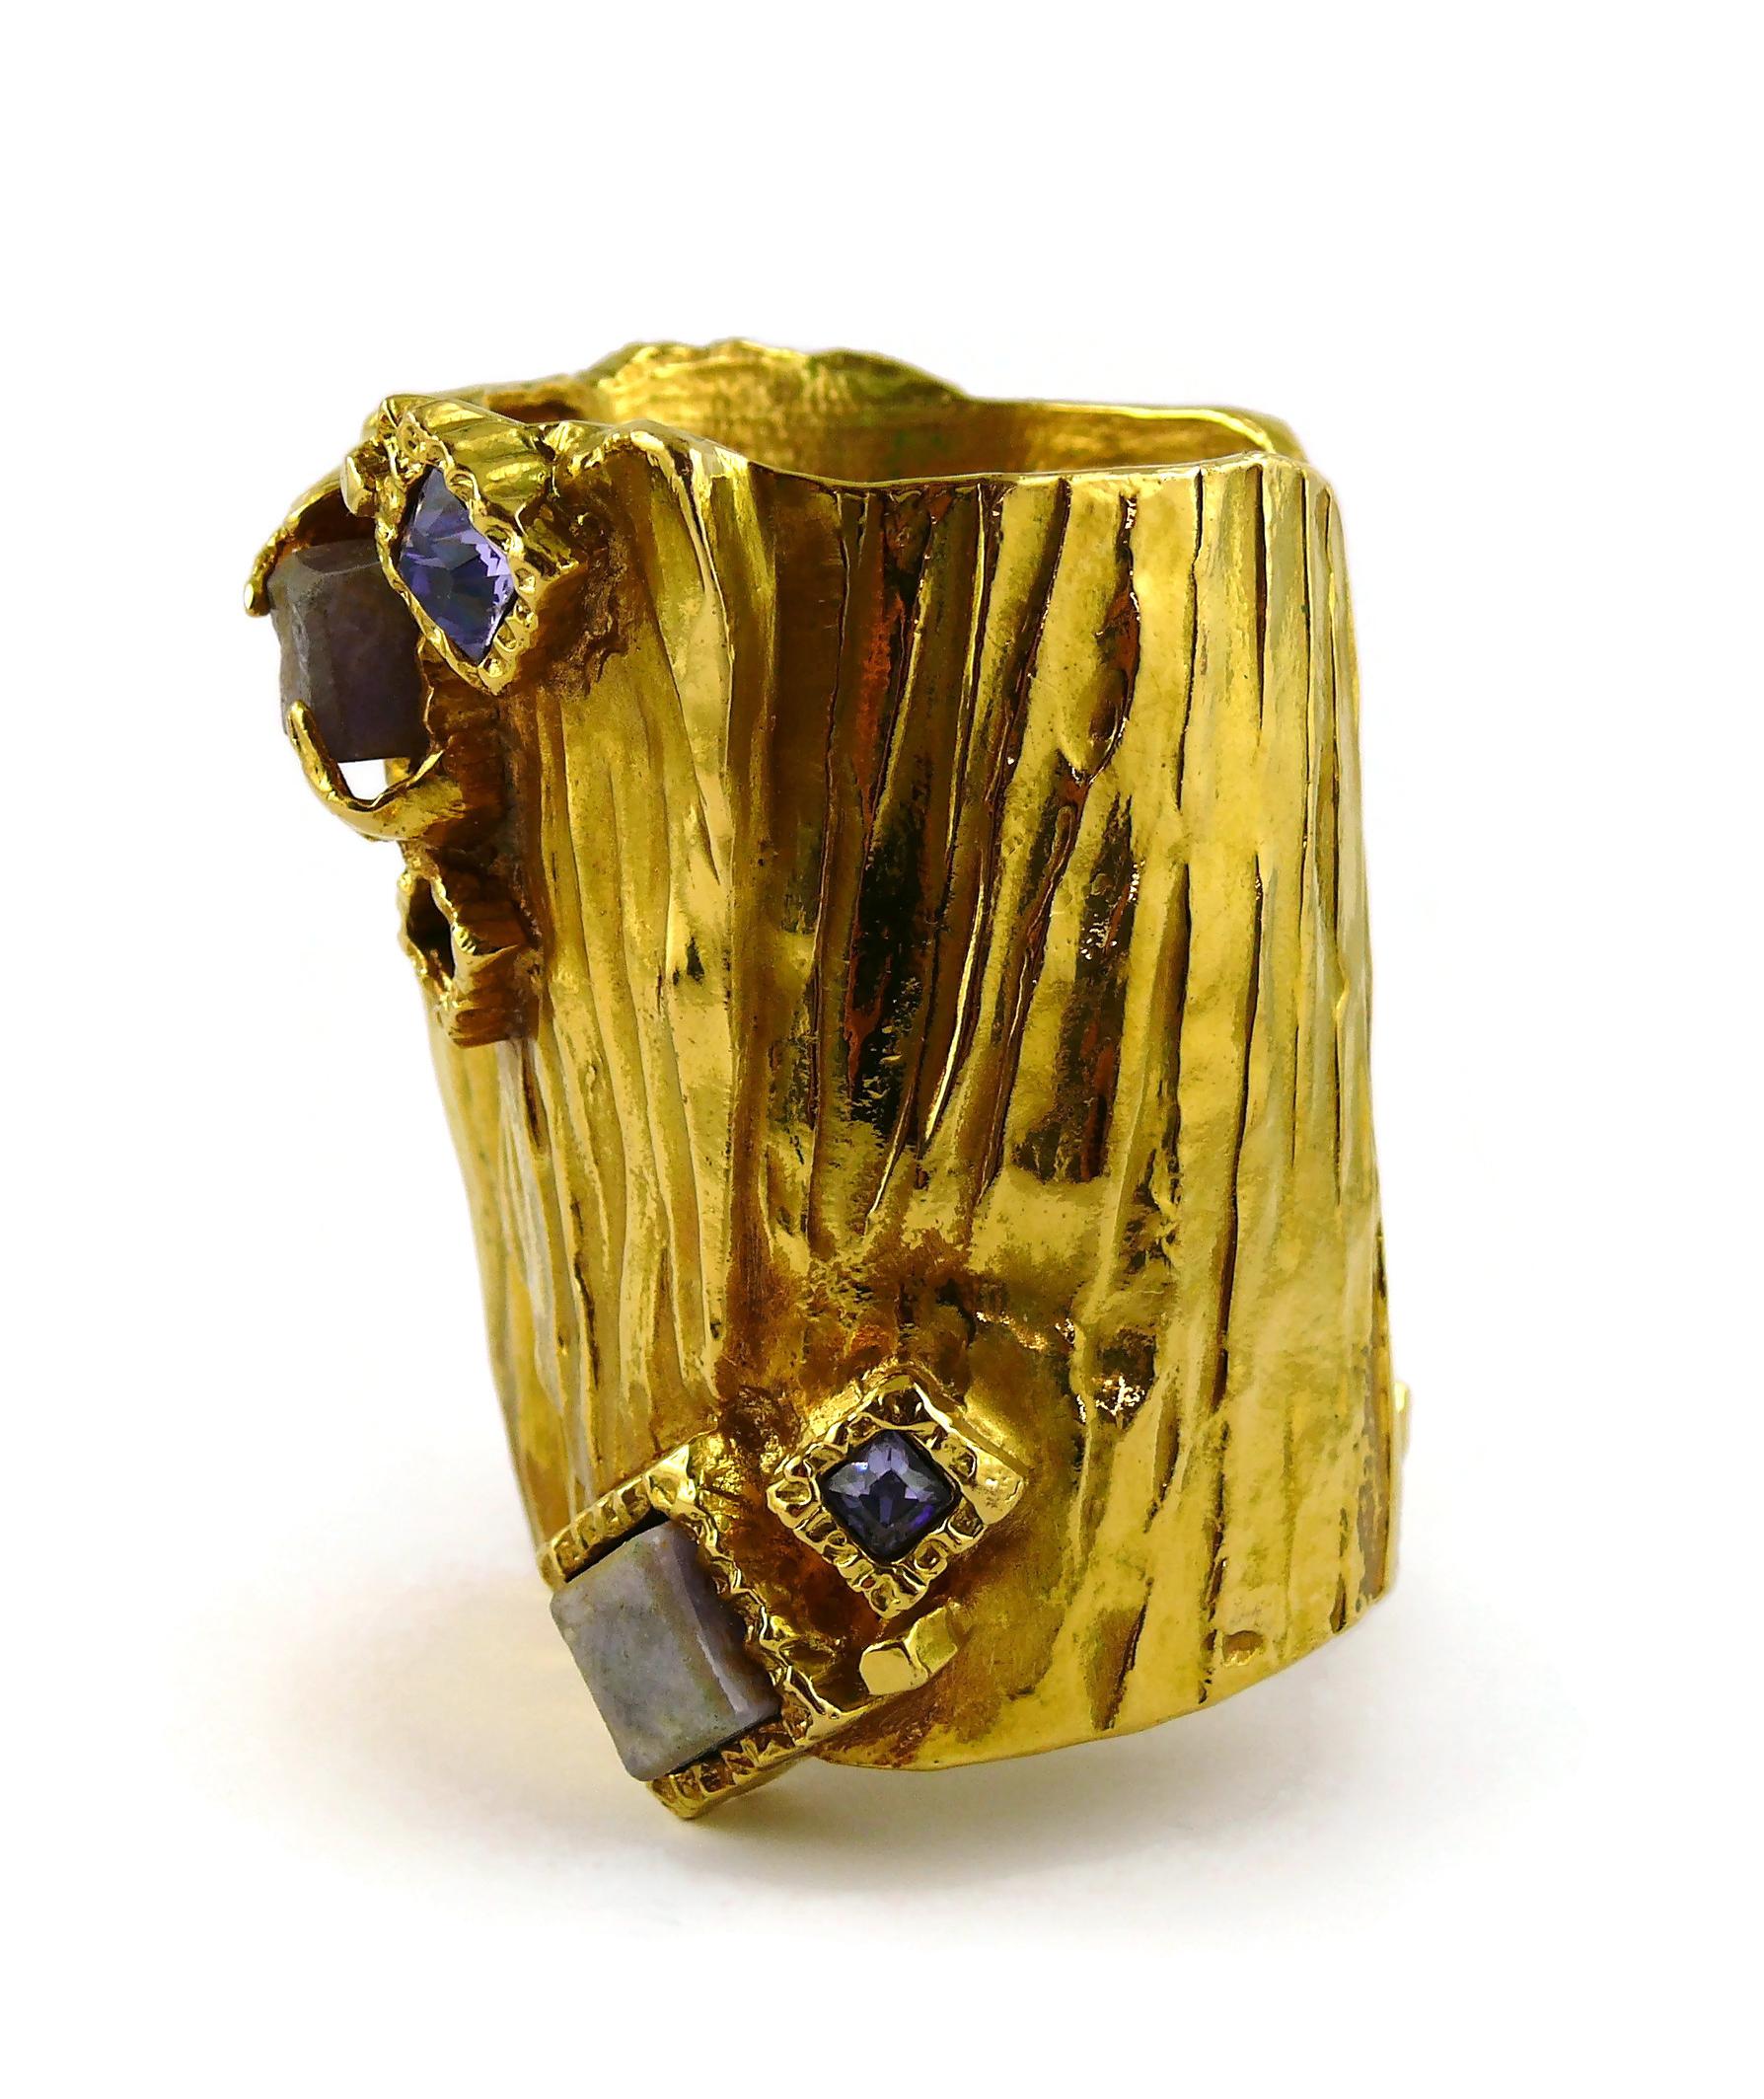 Yves Saint Laurent Massive Jewelled Arty Cuff Bracelet For Sale 2